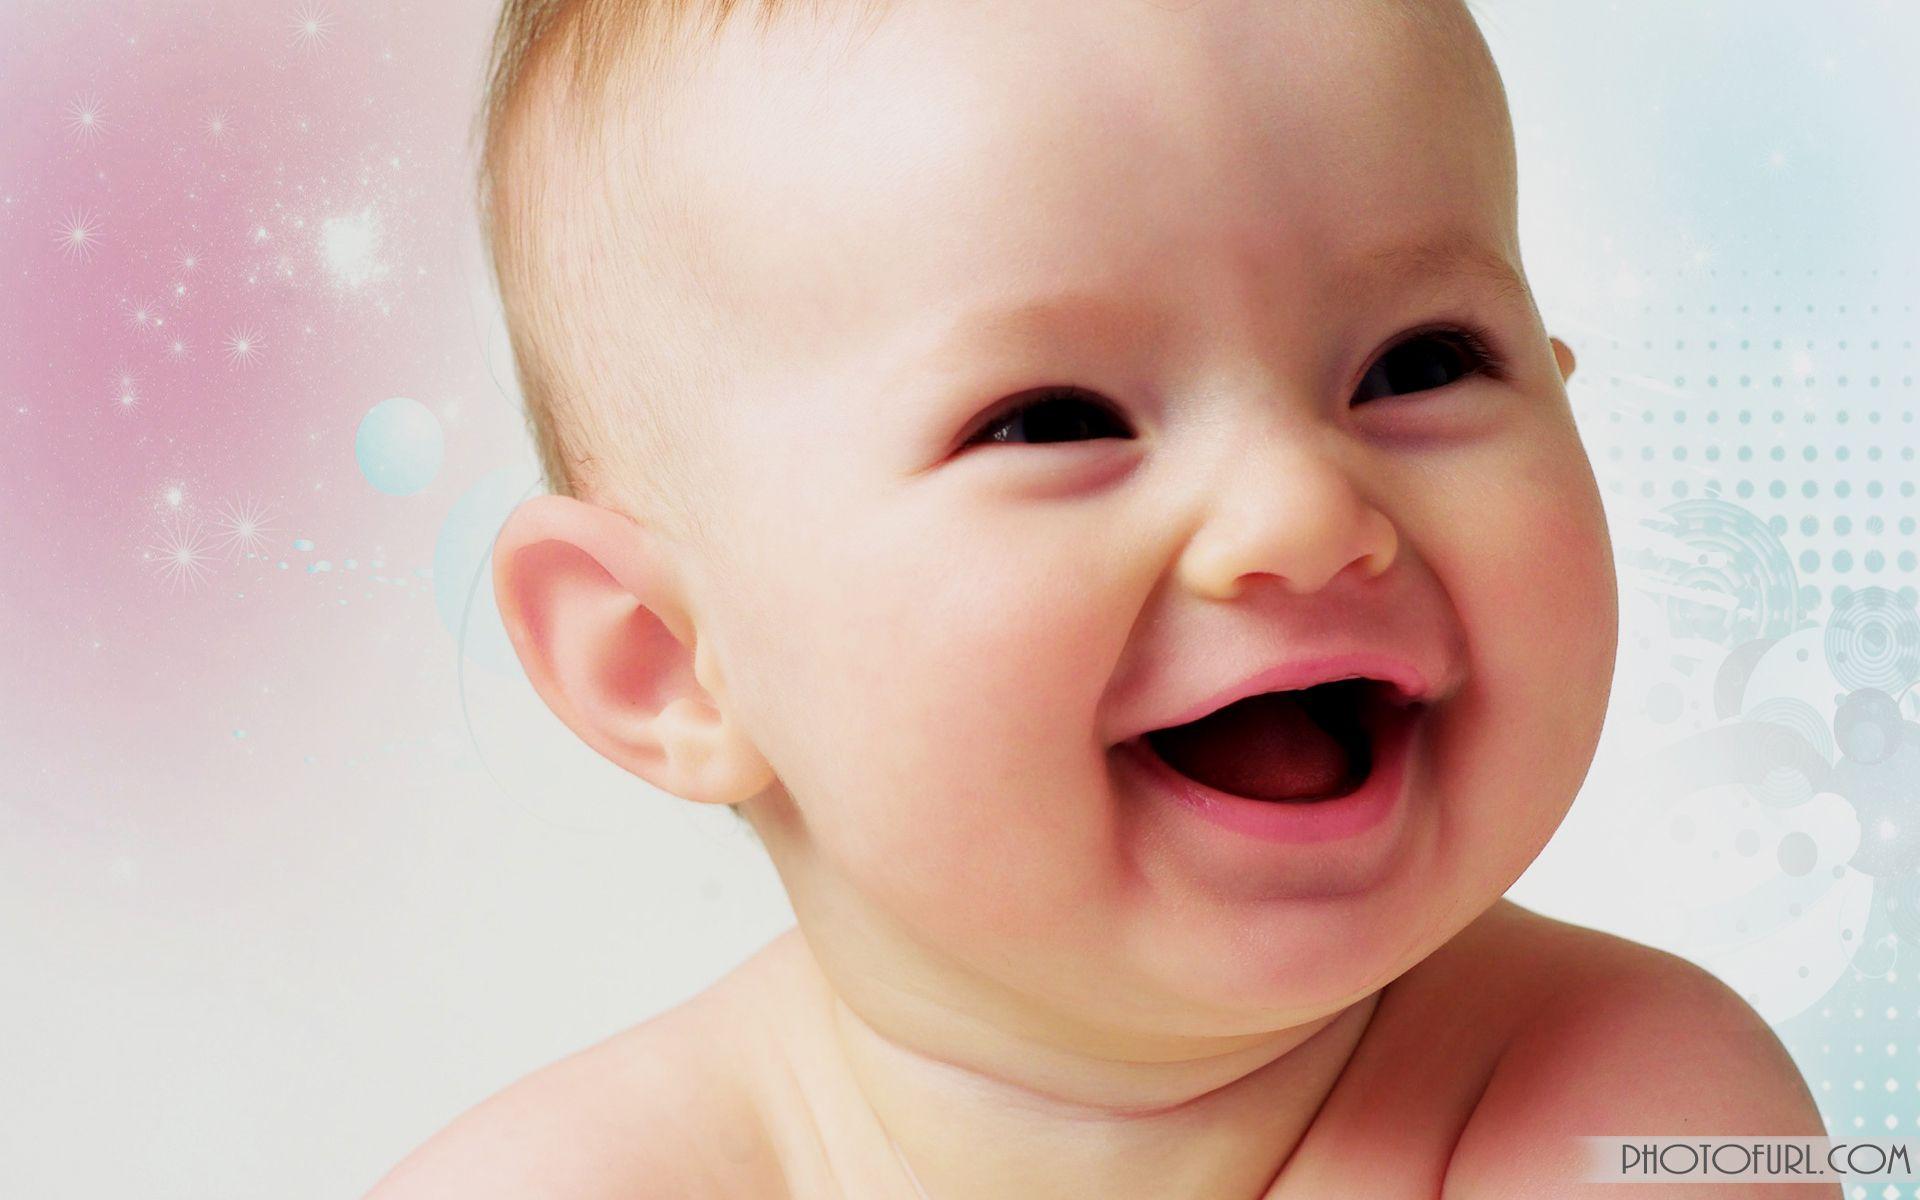 HD wallpaper: baby, baby girl, closeup, smile, cute, sweet, adorable,  winter | Wallpaper Flare